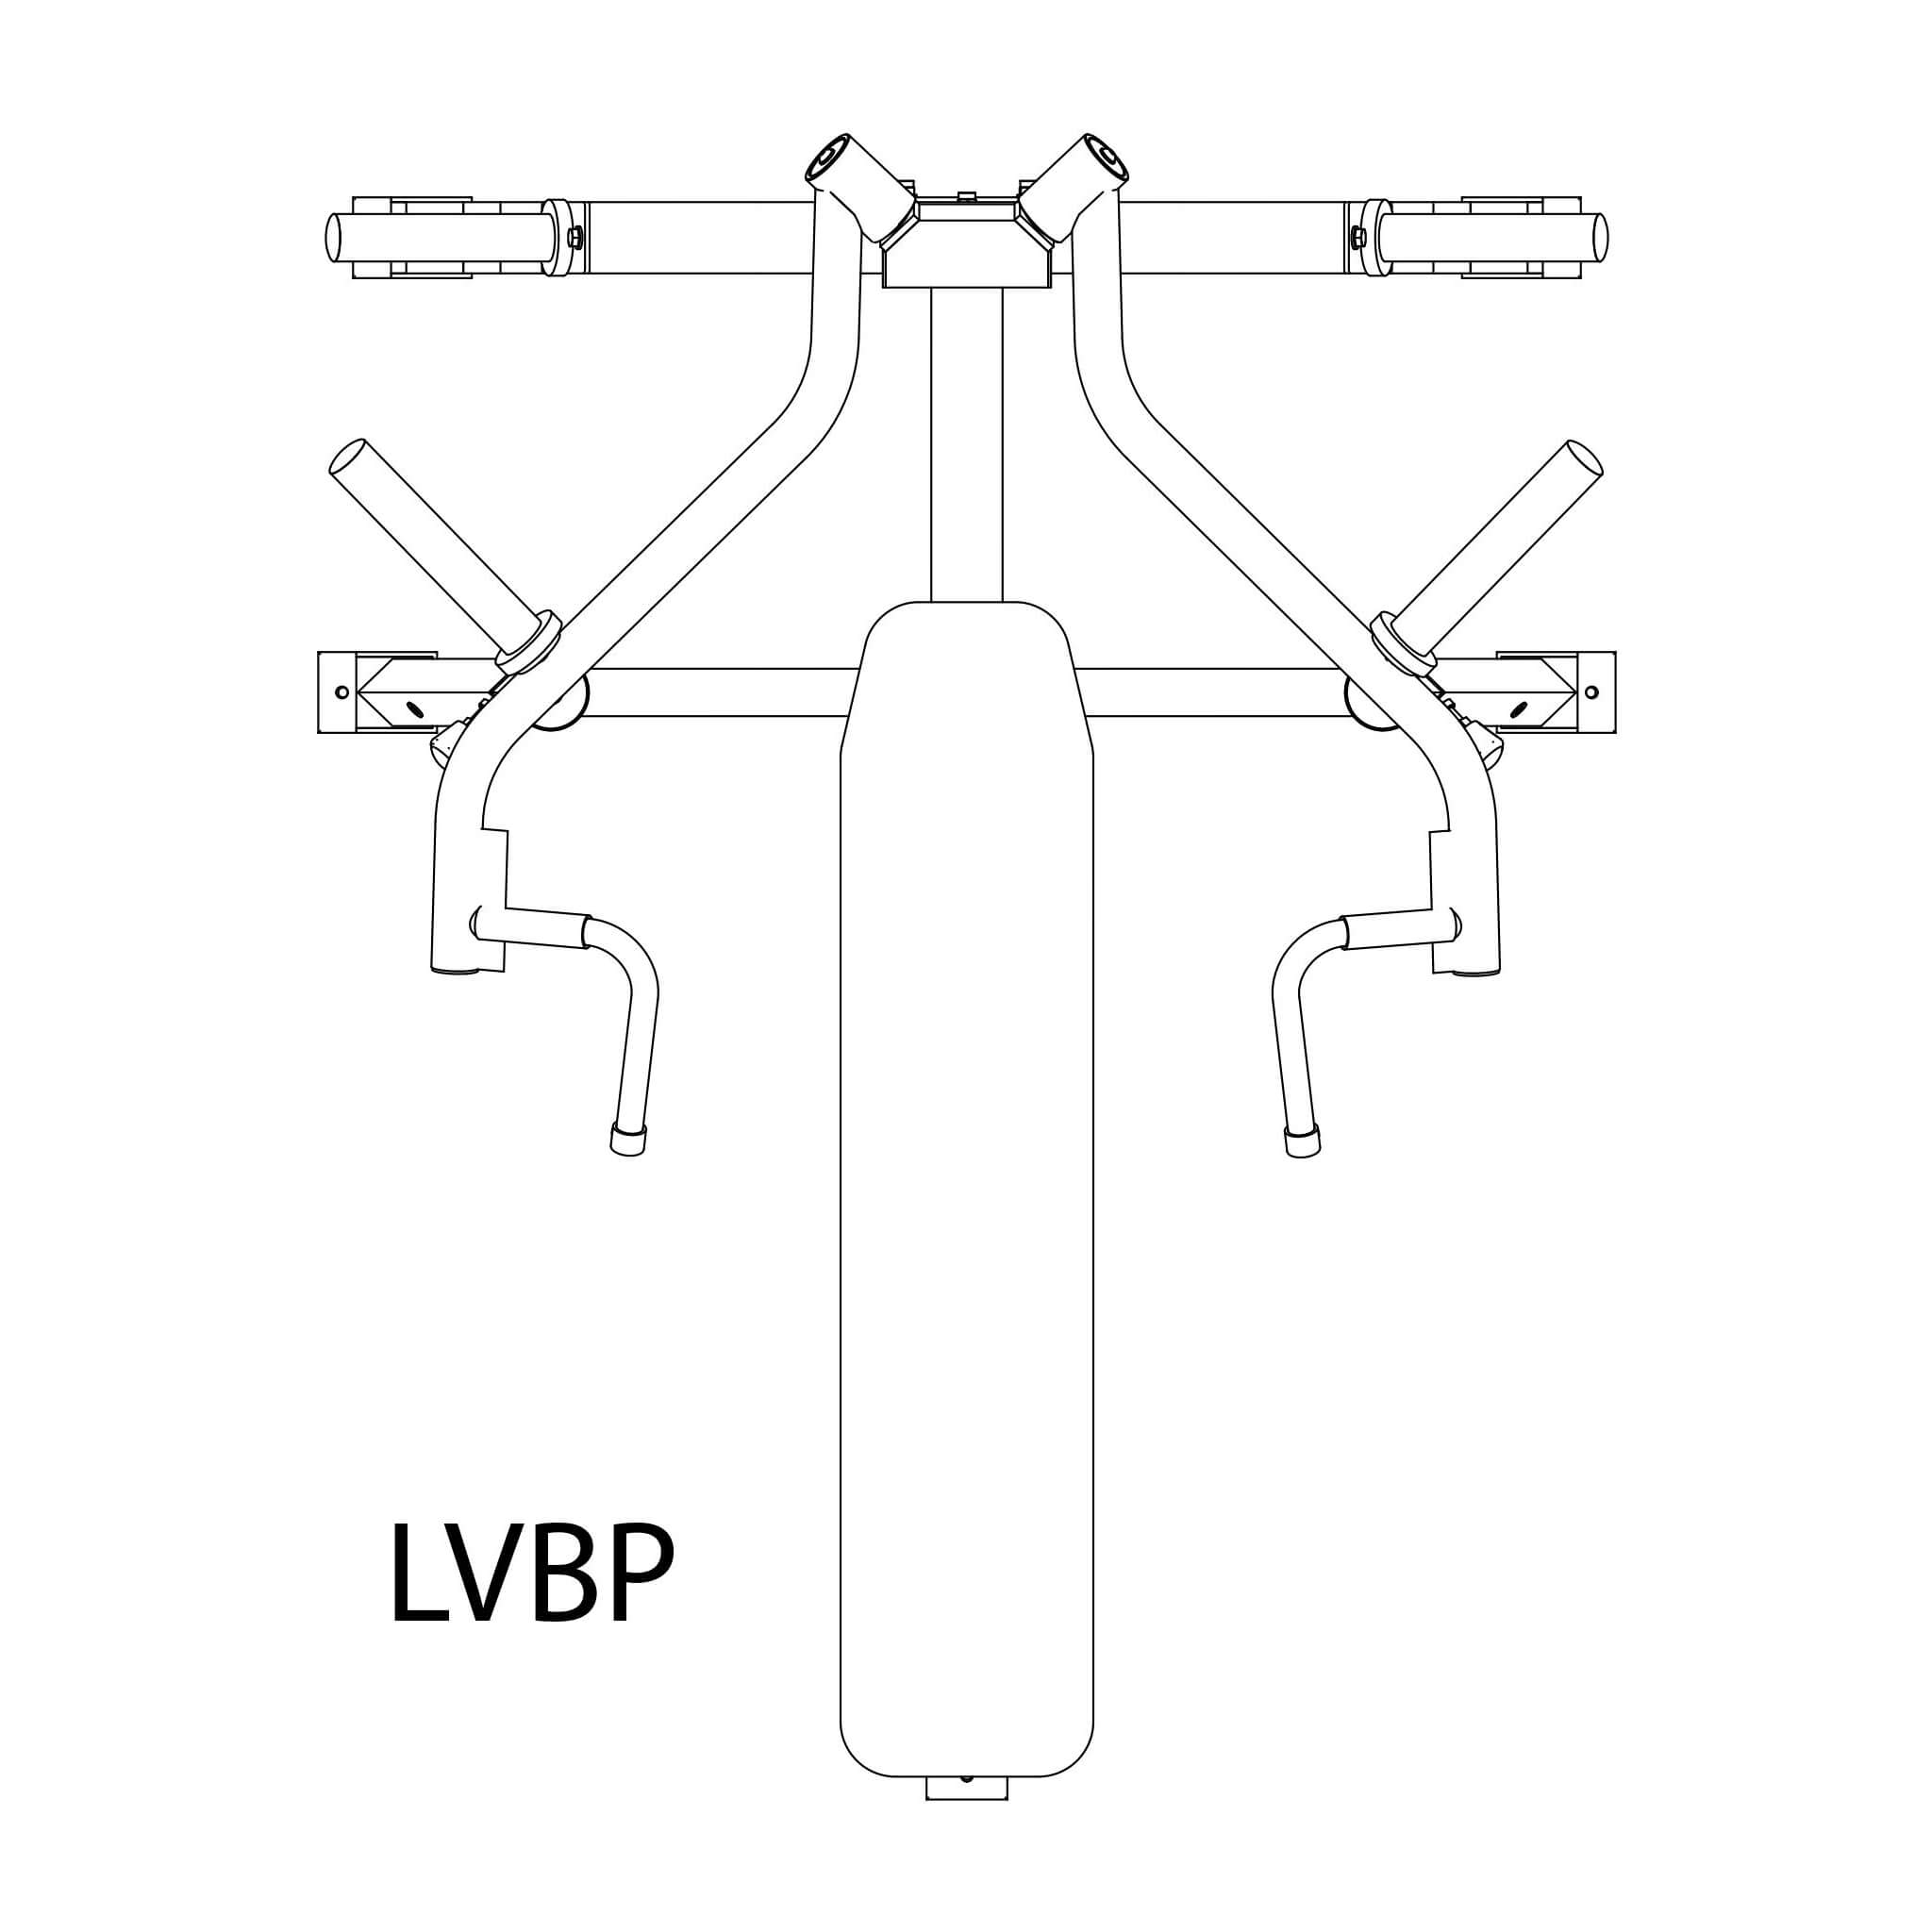 lvbp leverage bench press dimensions